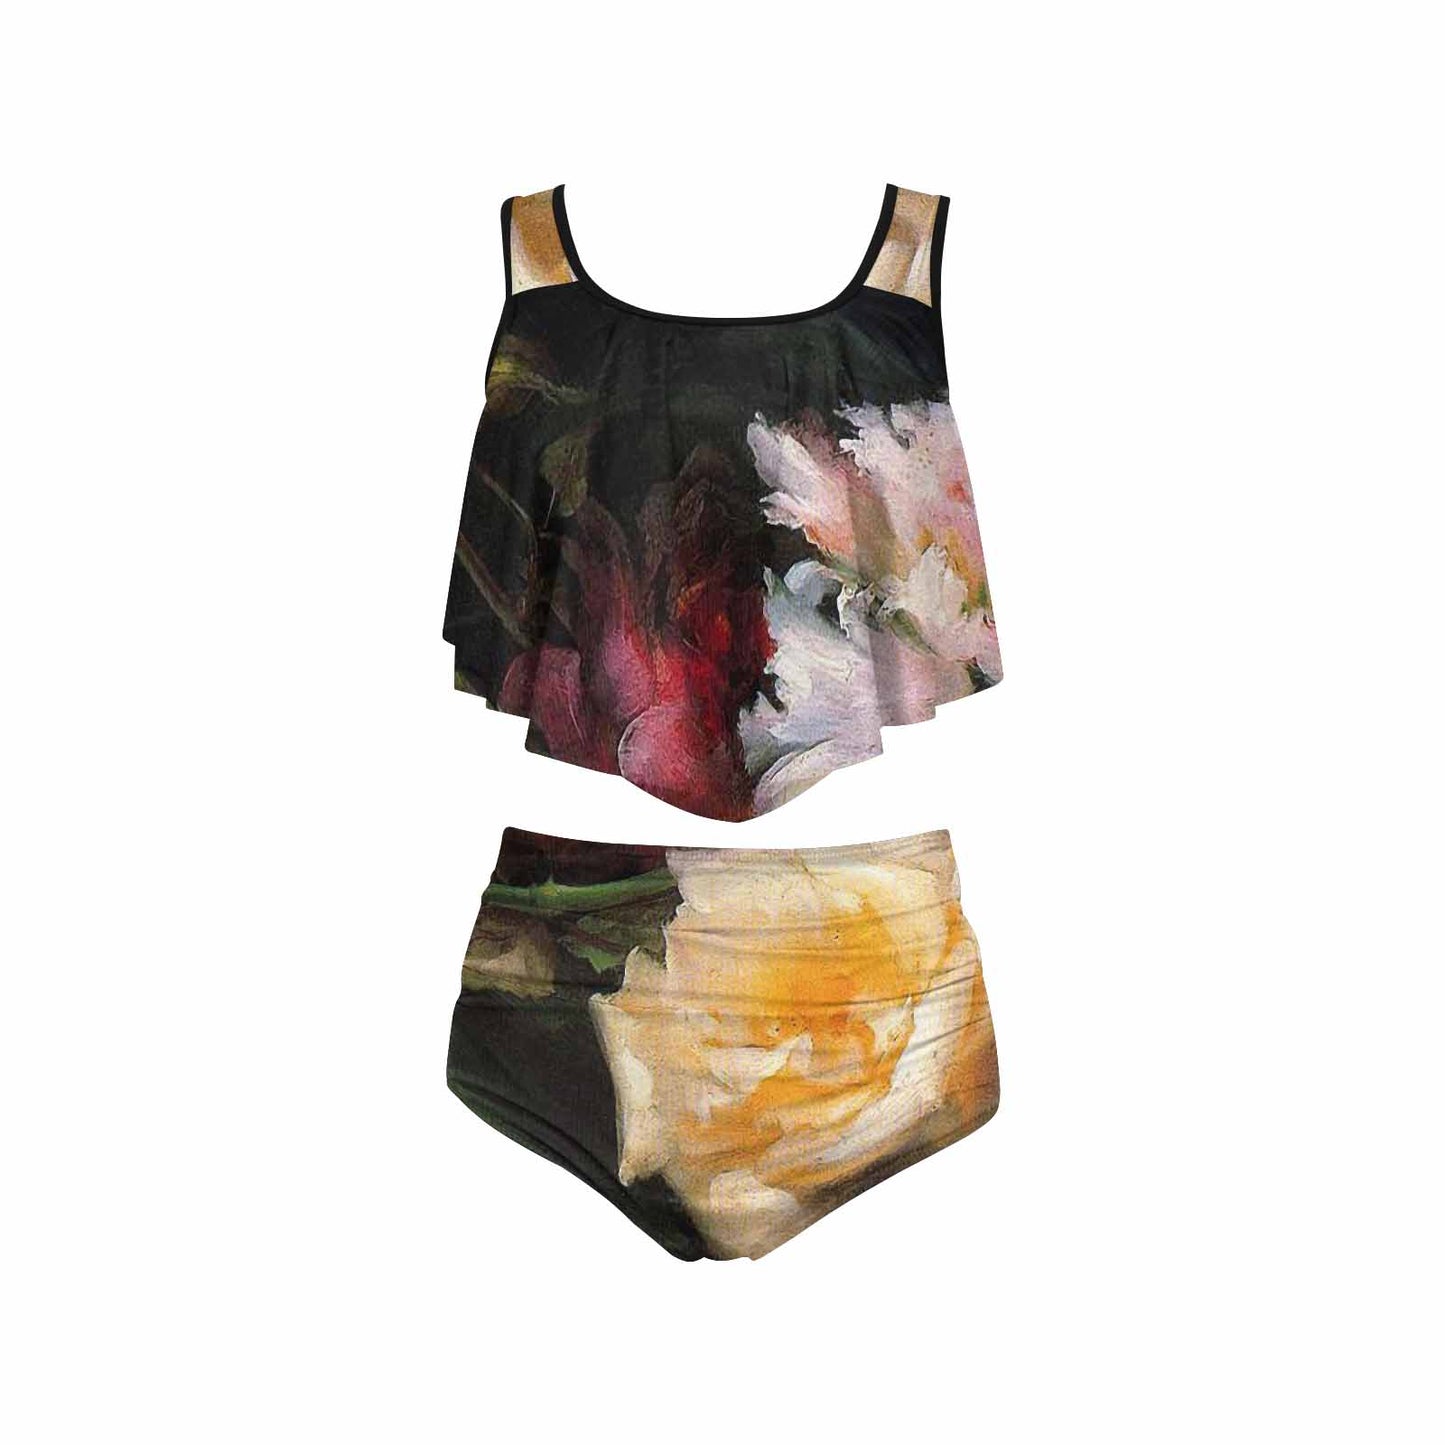 Vintage floral high waisted flounce top bikini, swim wear, Design 30